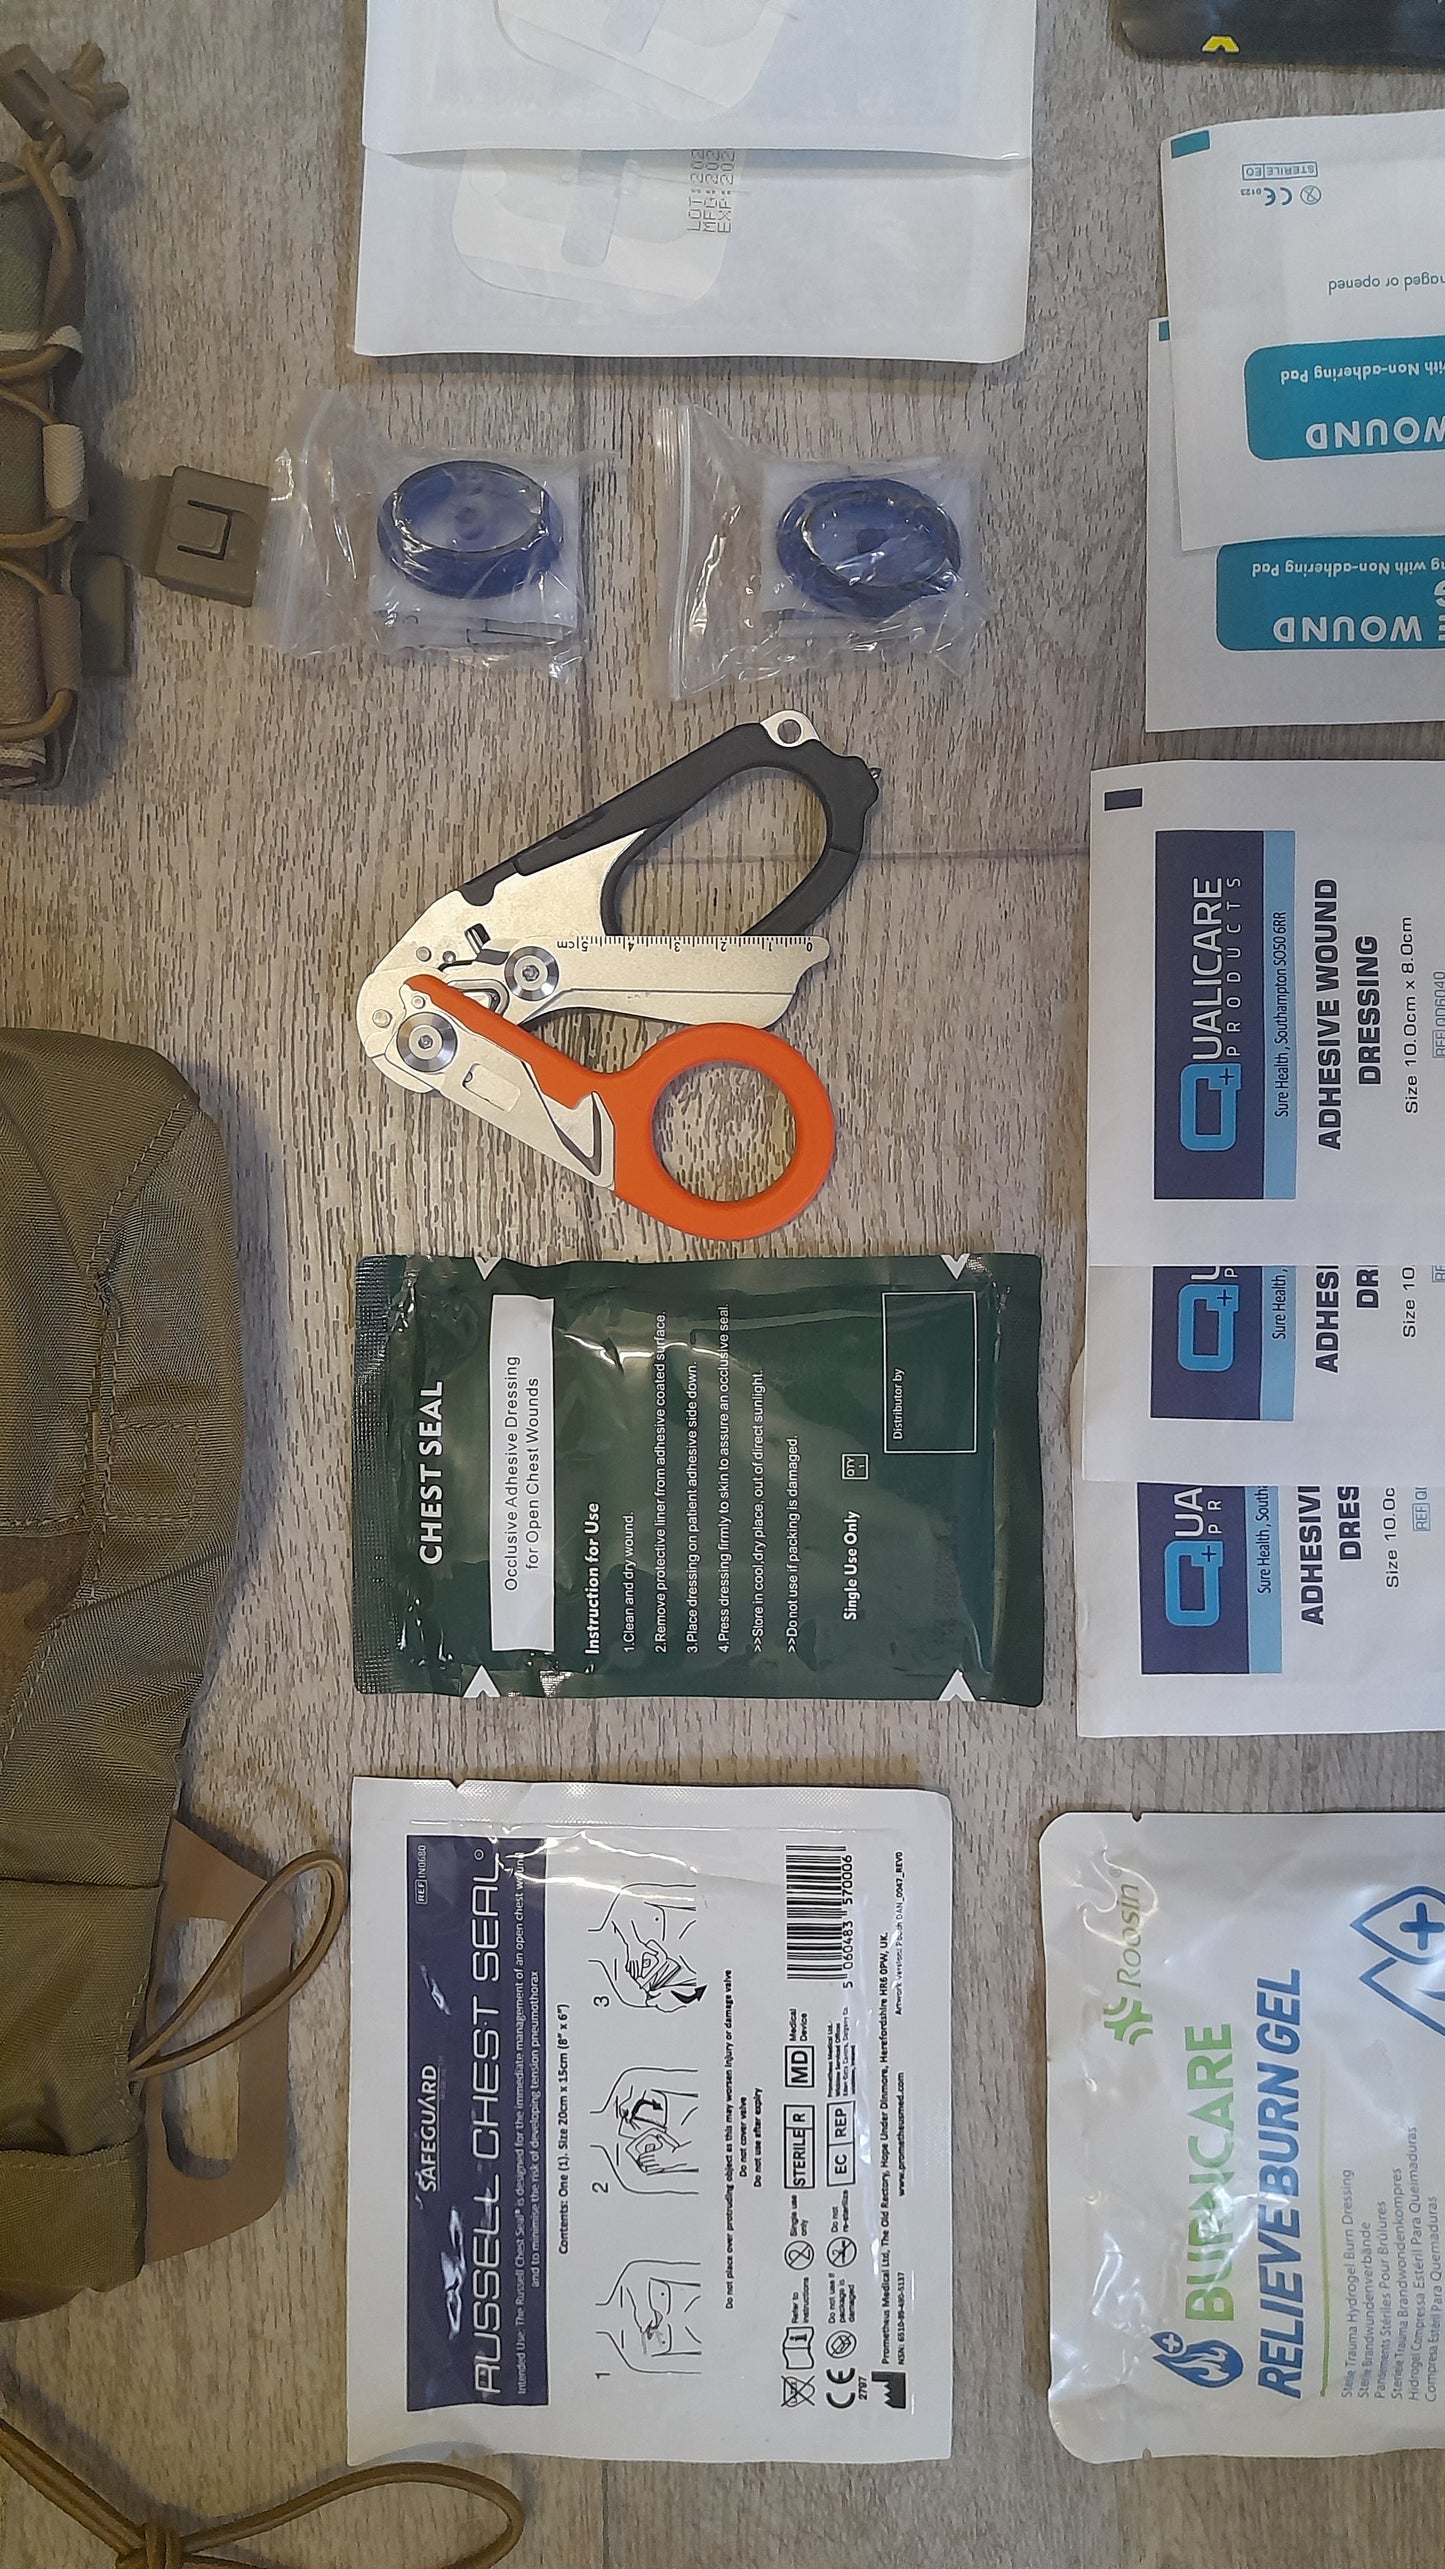 Para > IFAK > Combat medical Kit with QR bag and contents